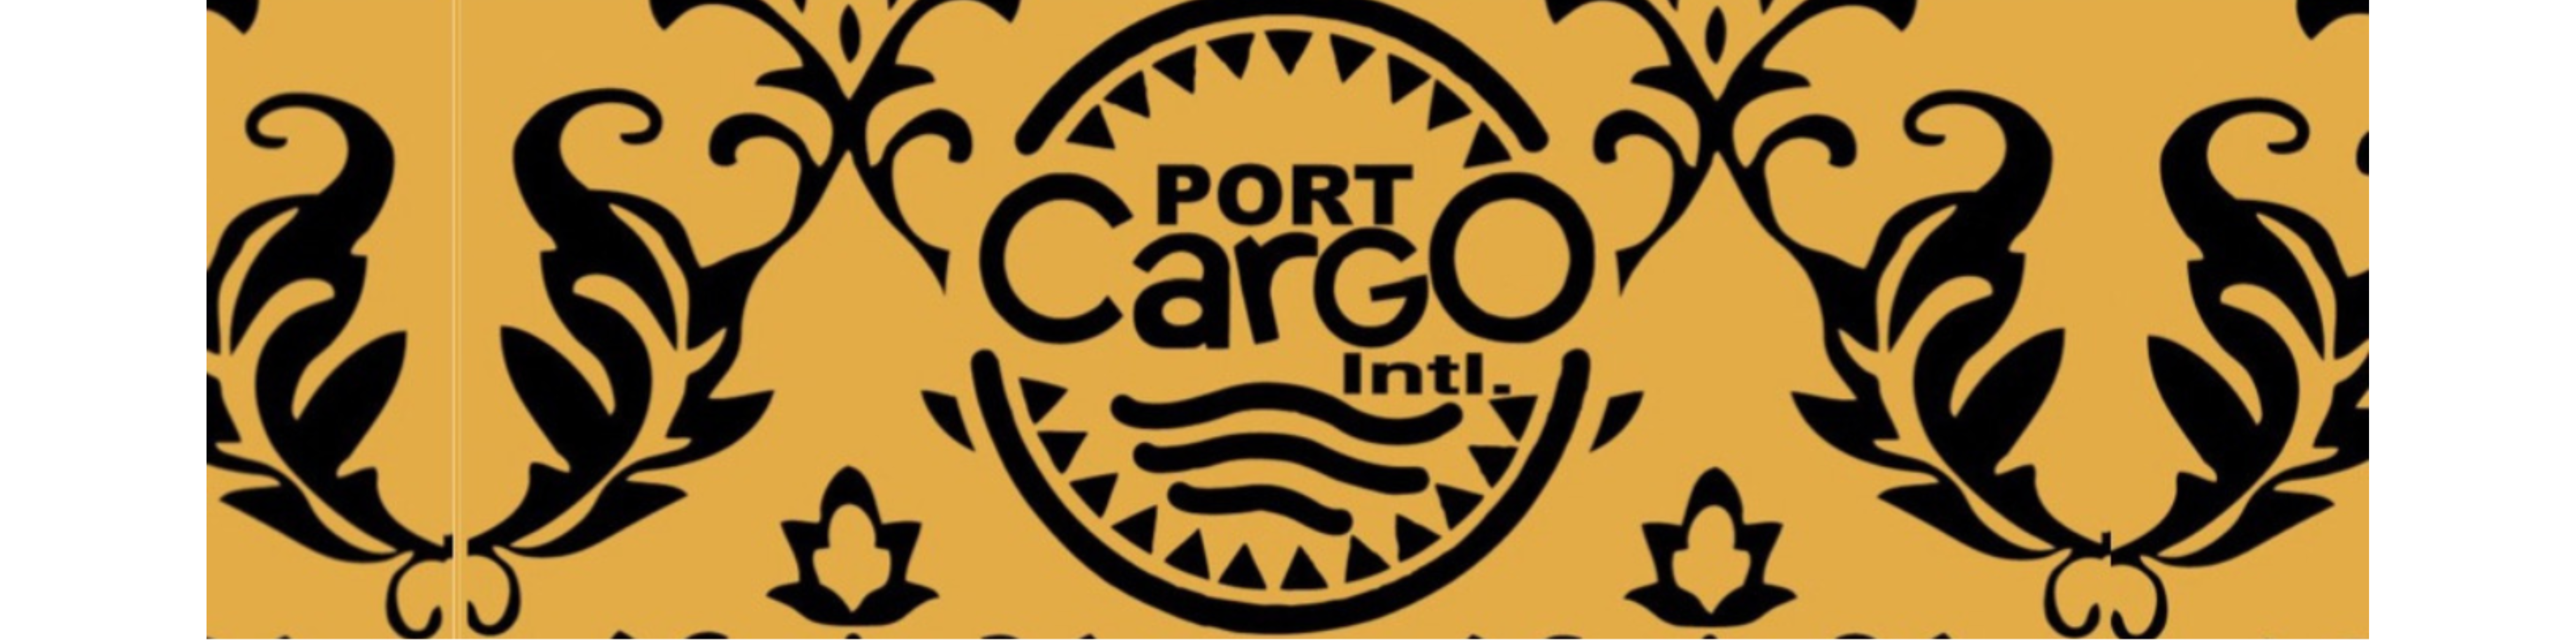 Port Cargo Cape Cod